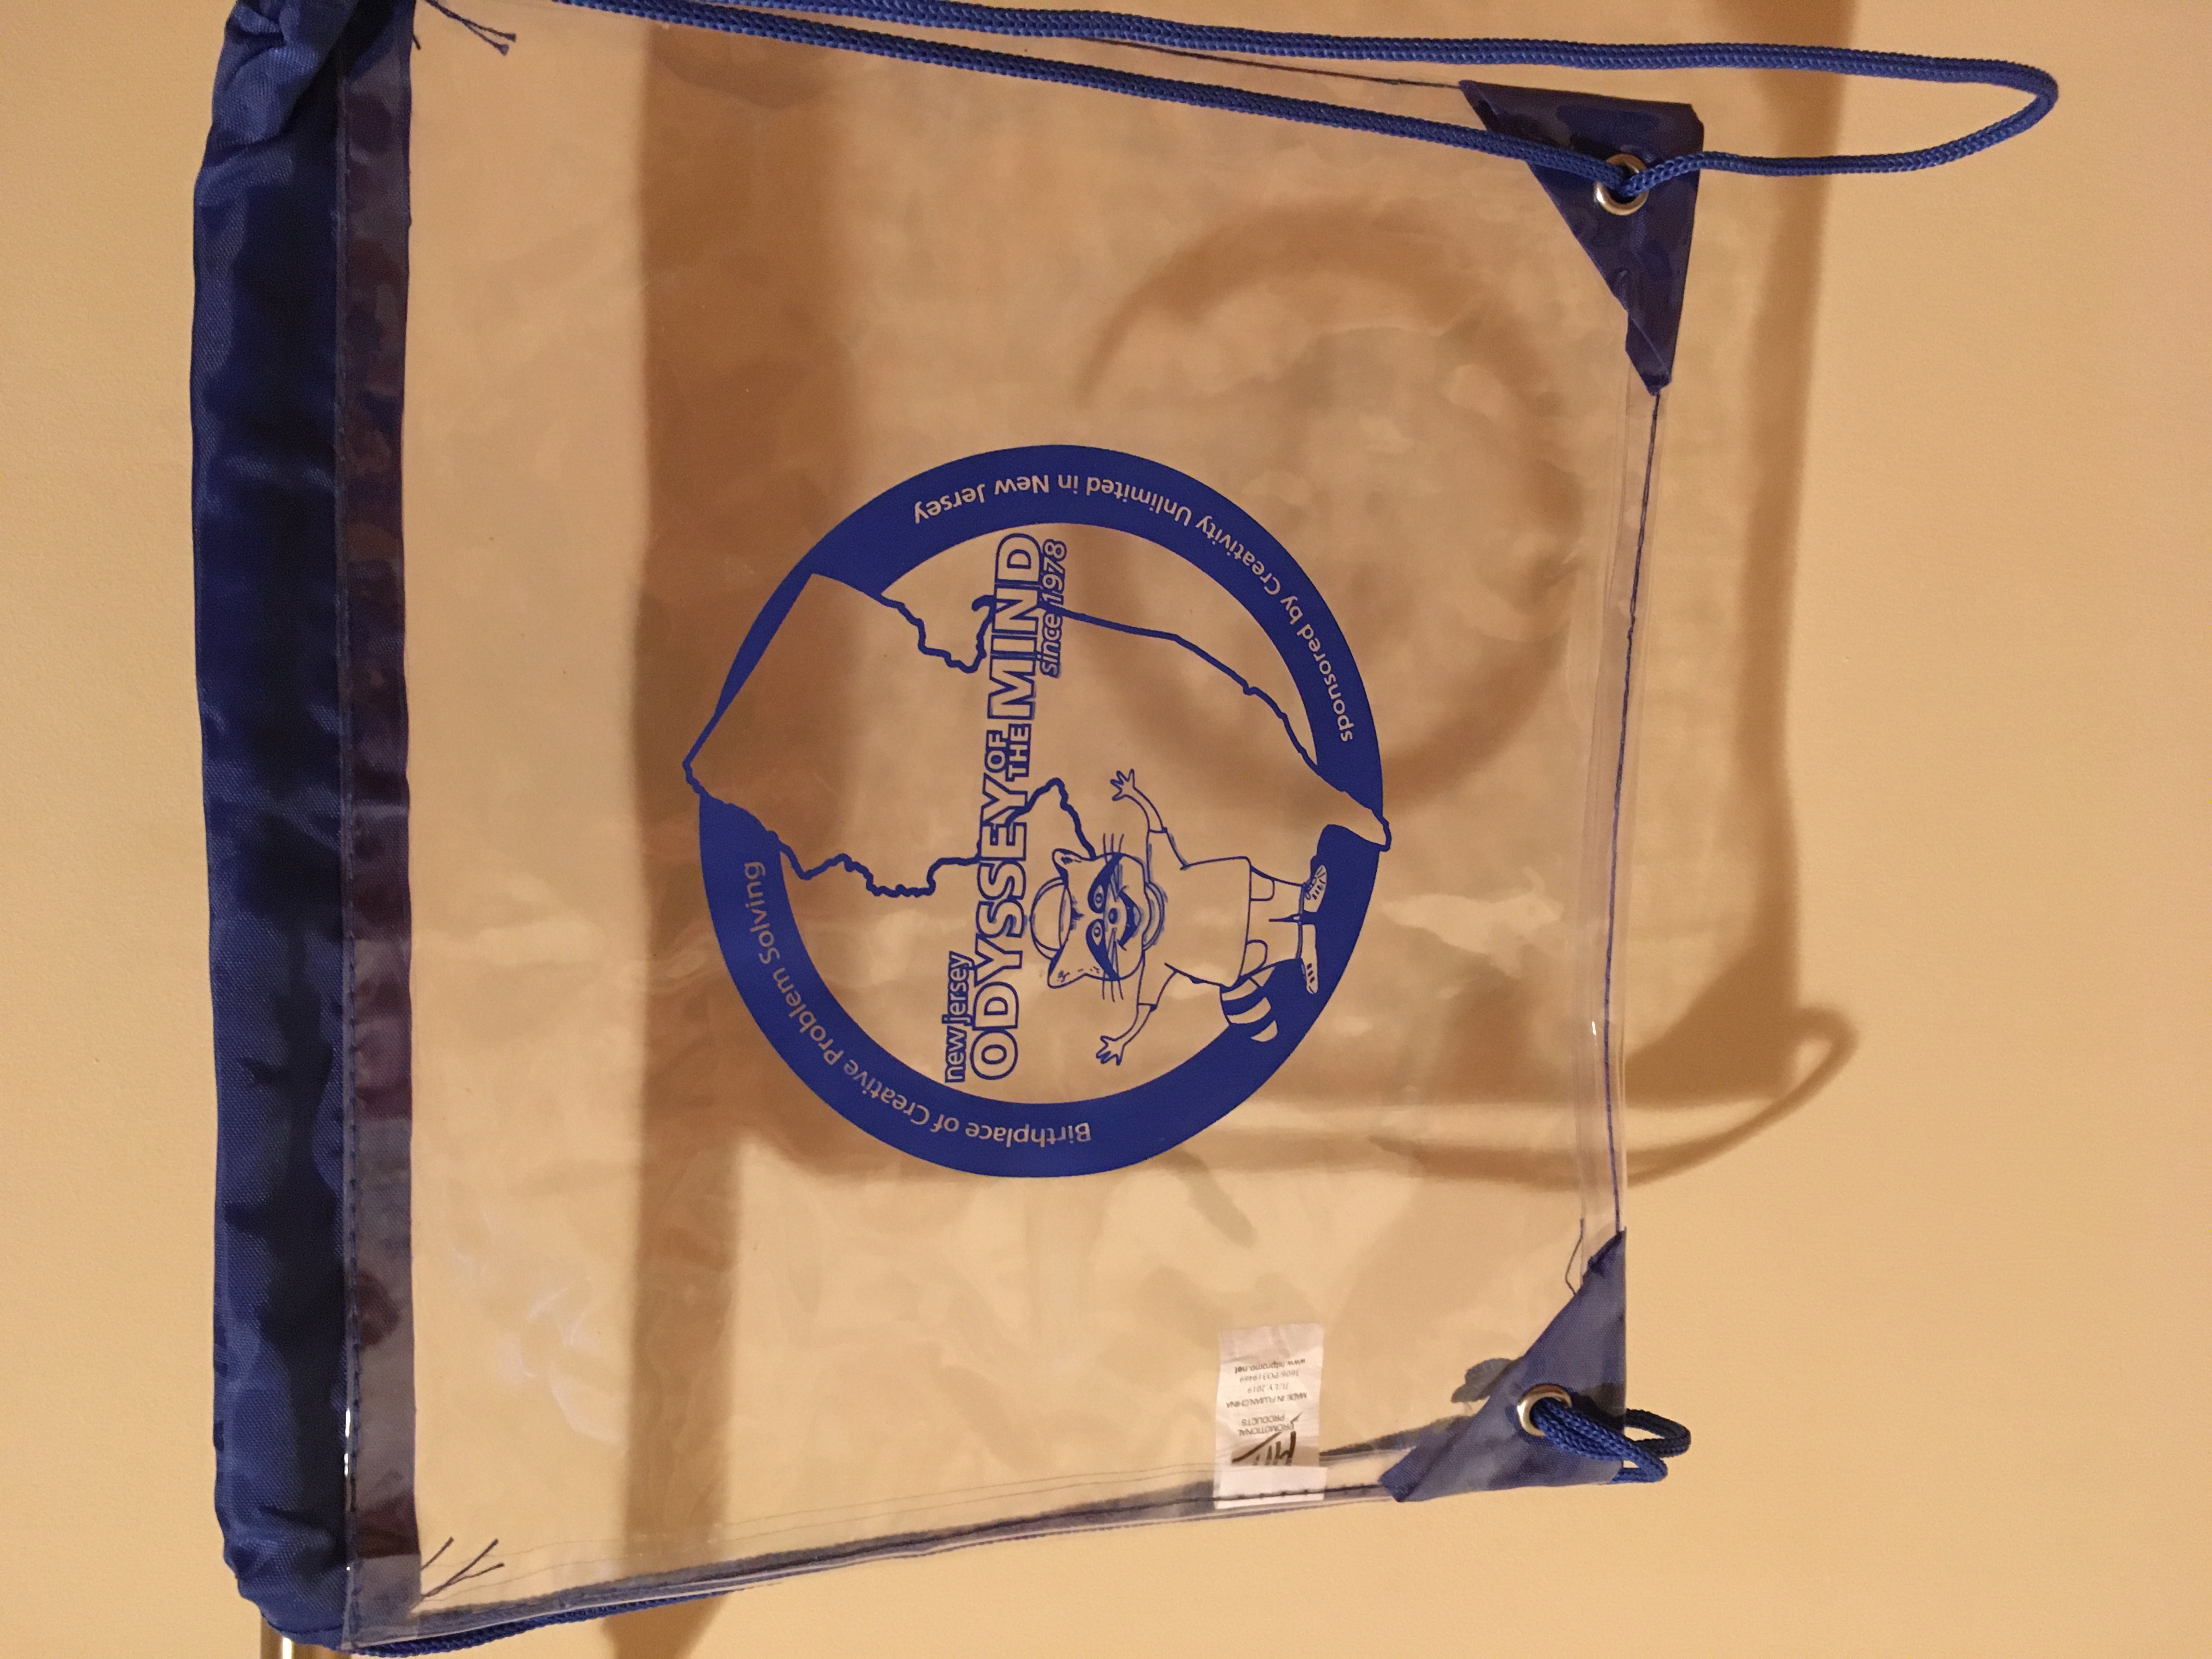 Clear plastic draw string bag with NJ Odyssey logo